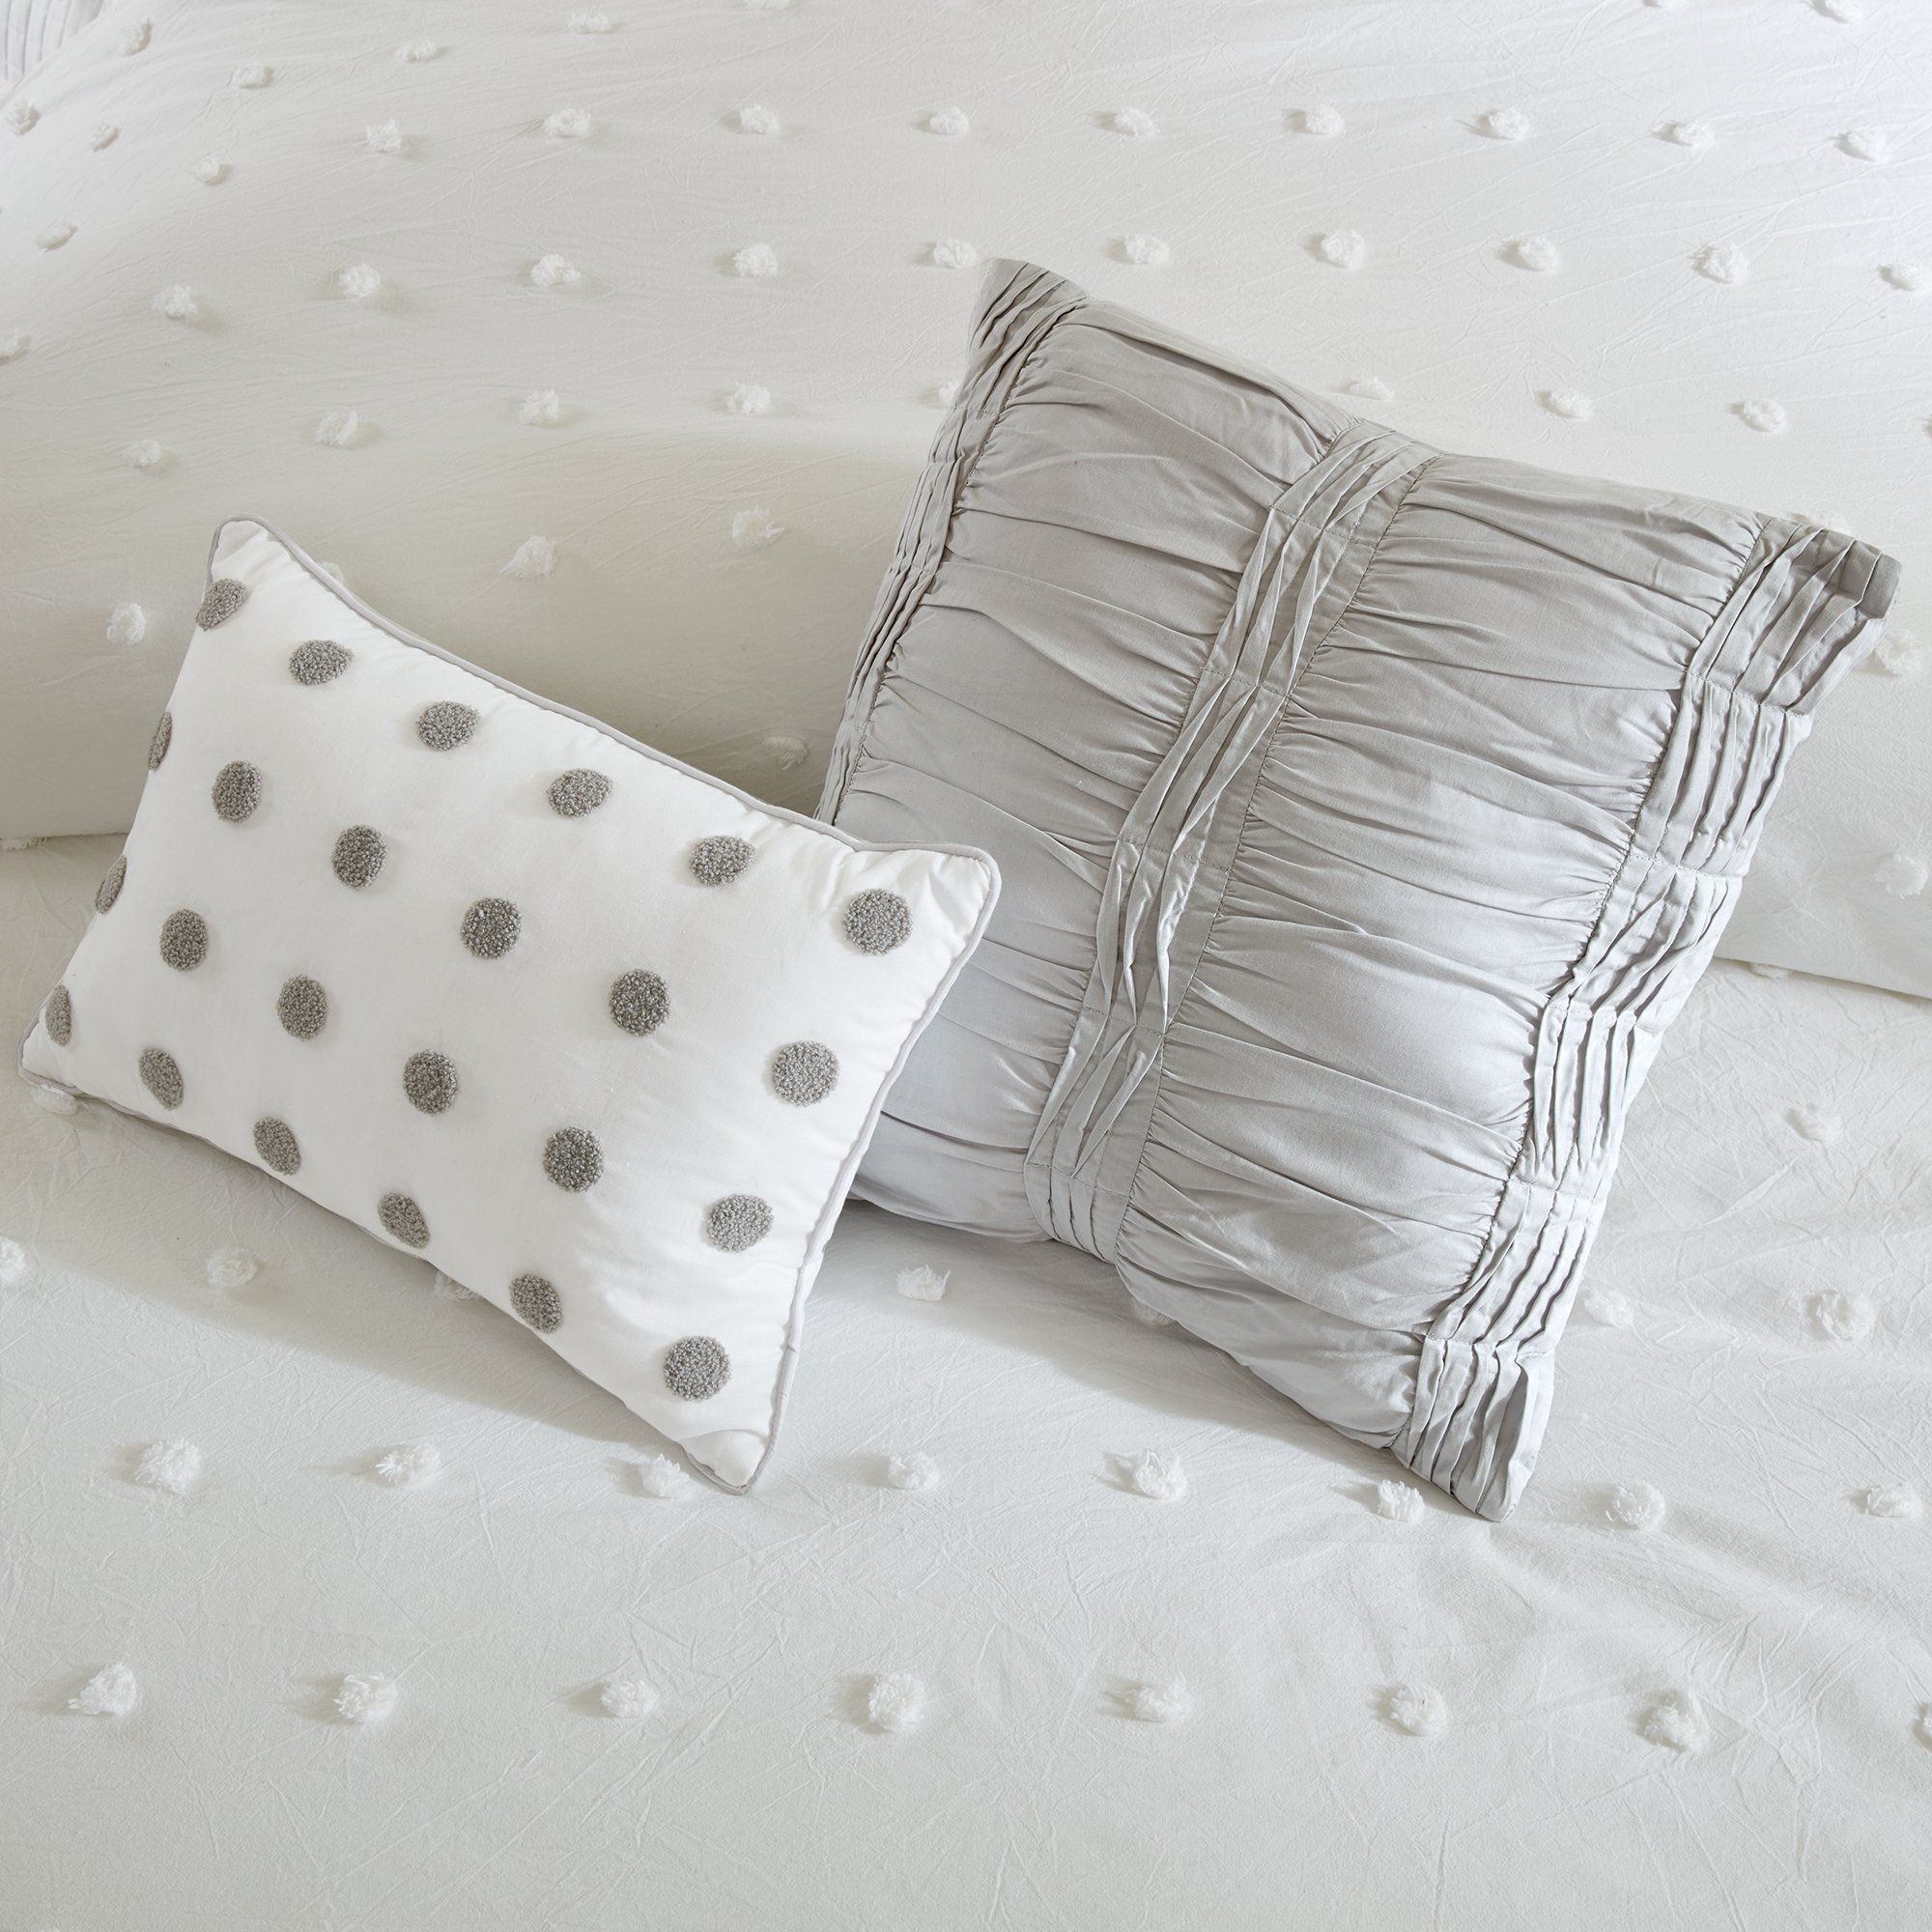 Home Essence Apartment Cotton Jacquard Ivory 5-Piece Comforter Set, Twin/Twin XL | Walmart (US)